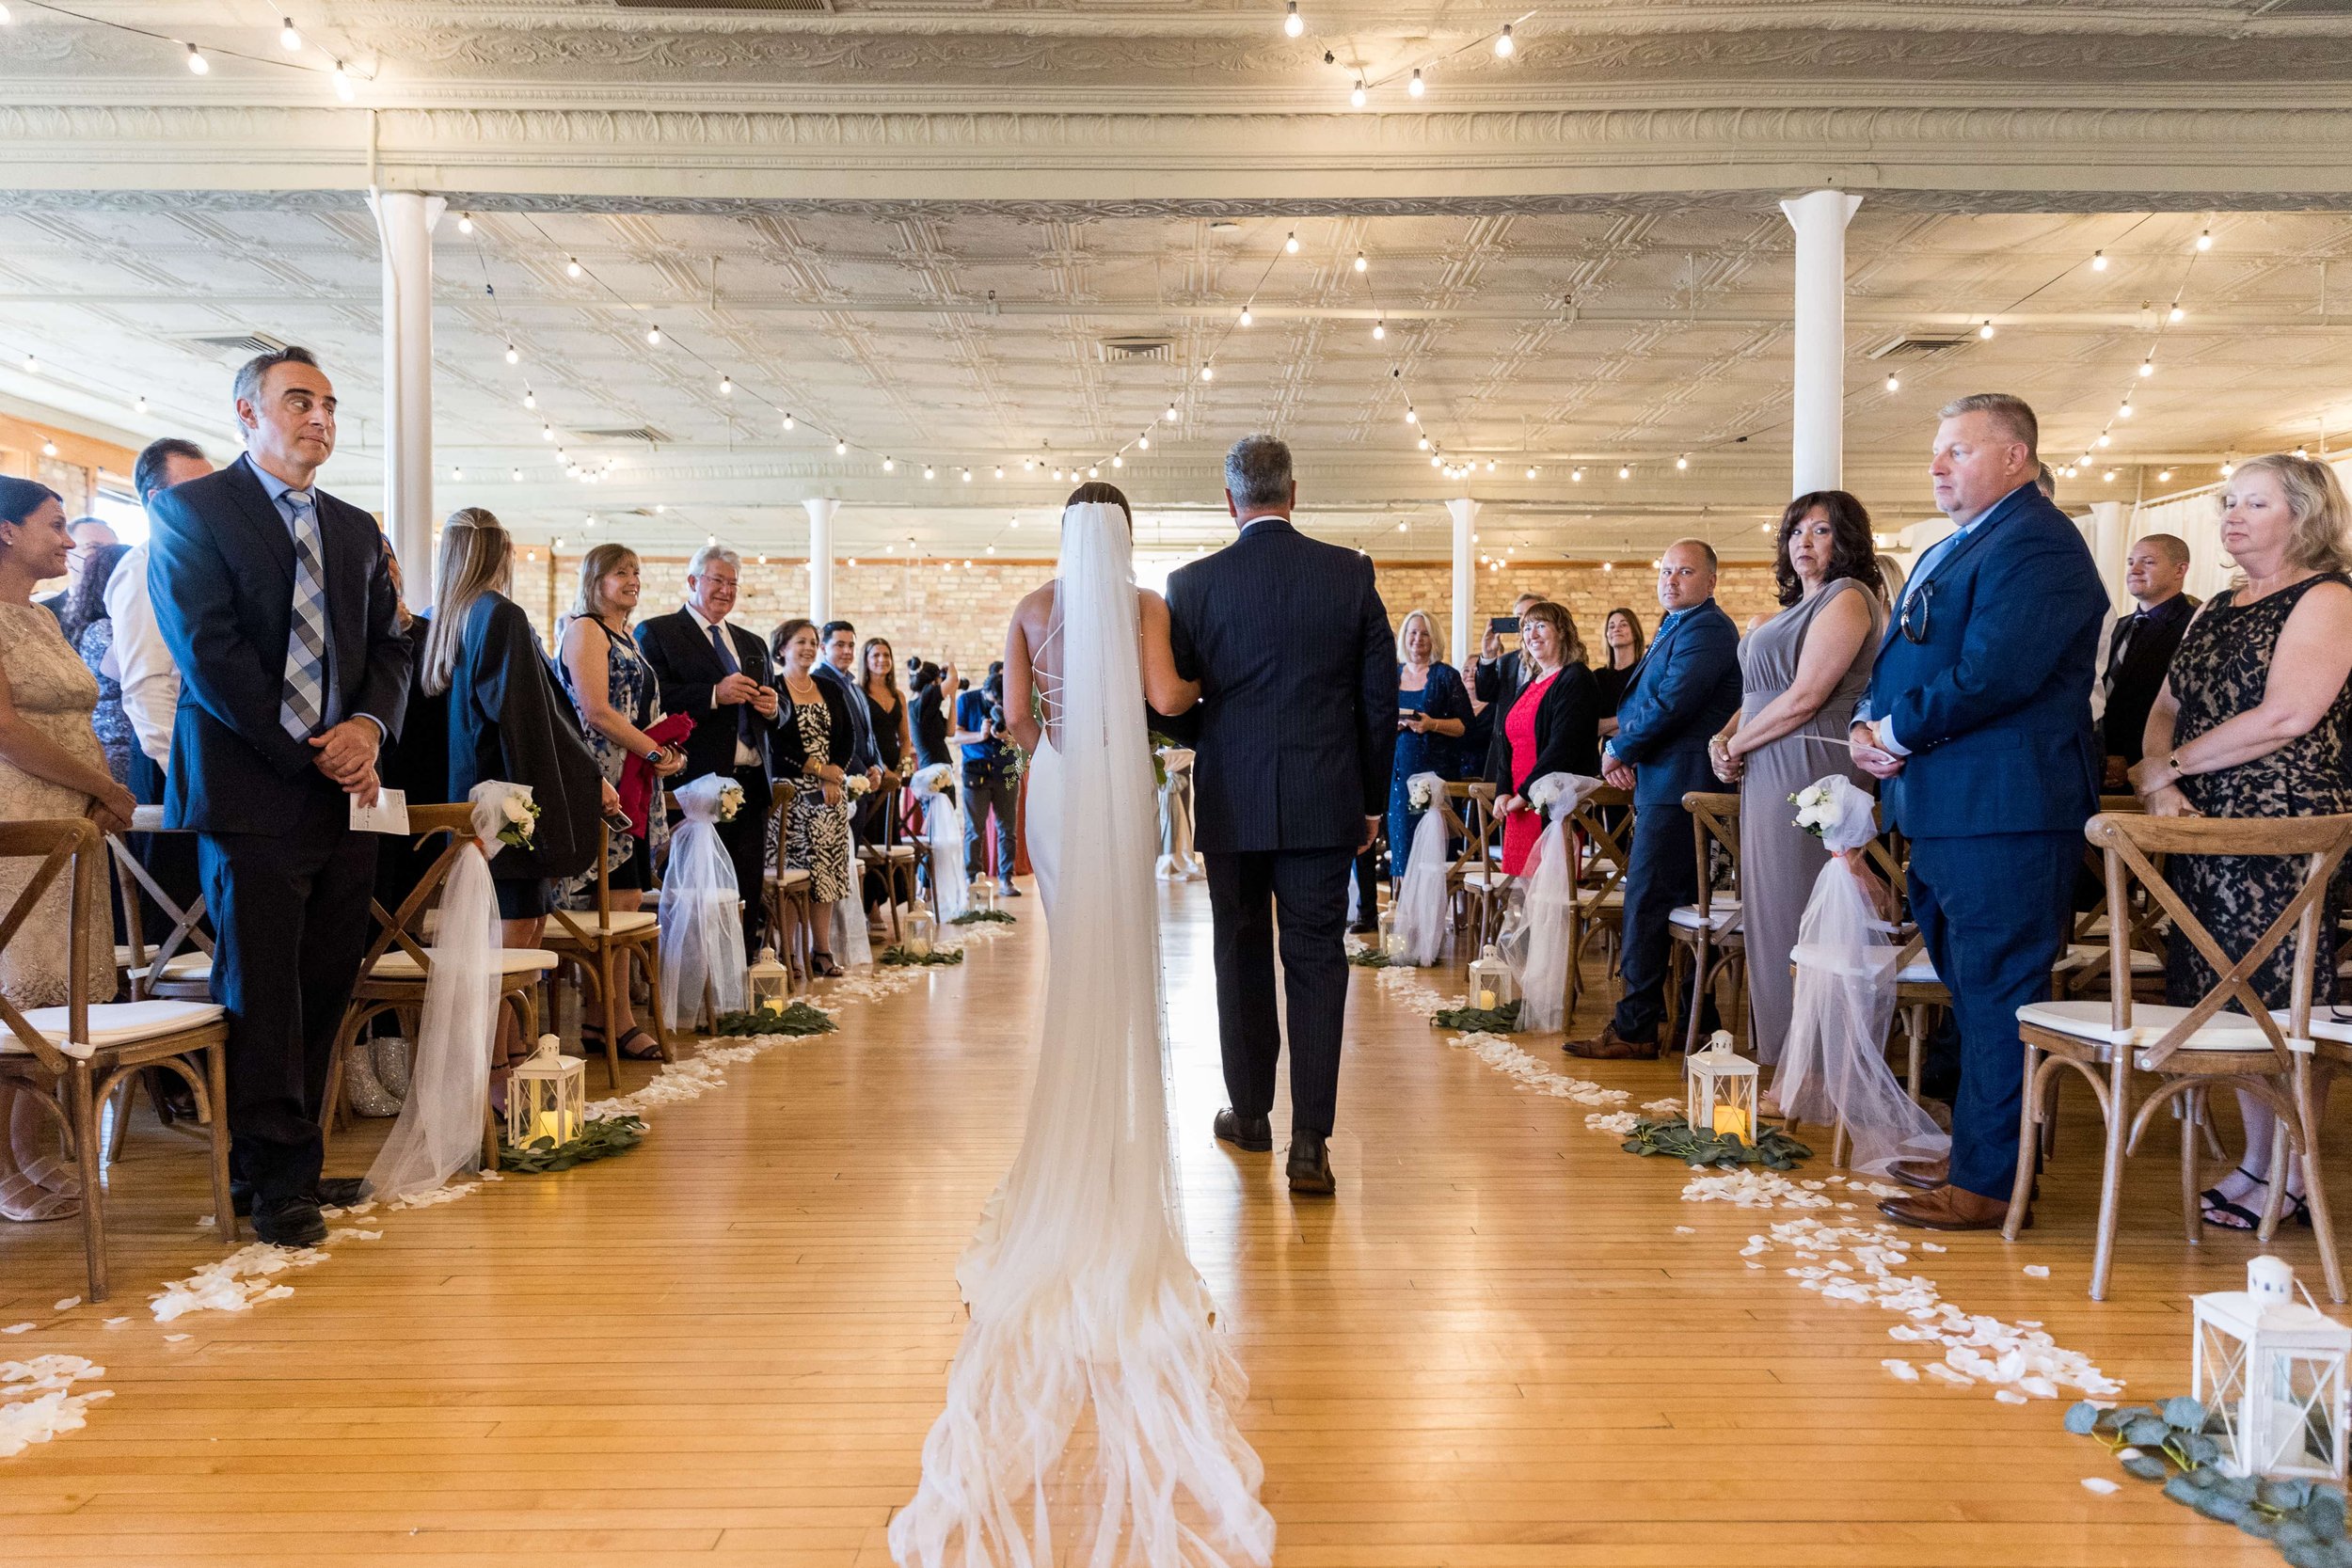 Ceremony at Highland Loft Wedding venue near Chicago IL